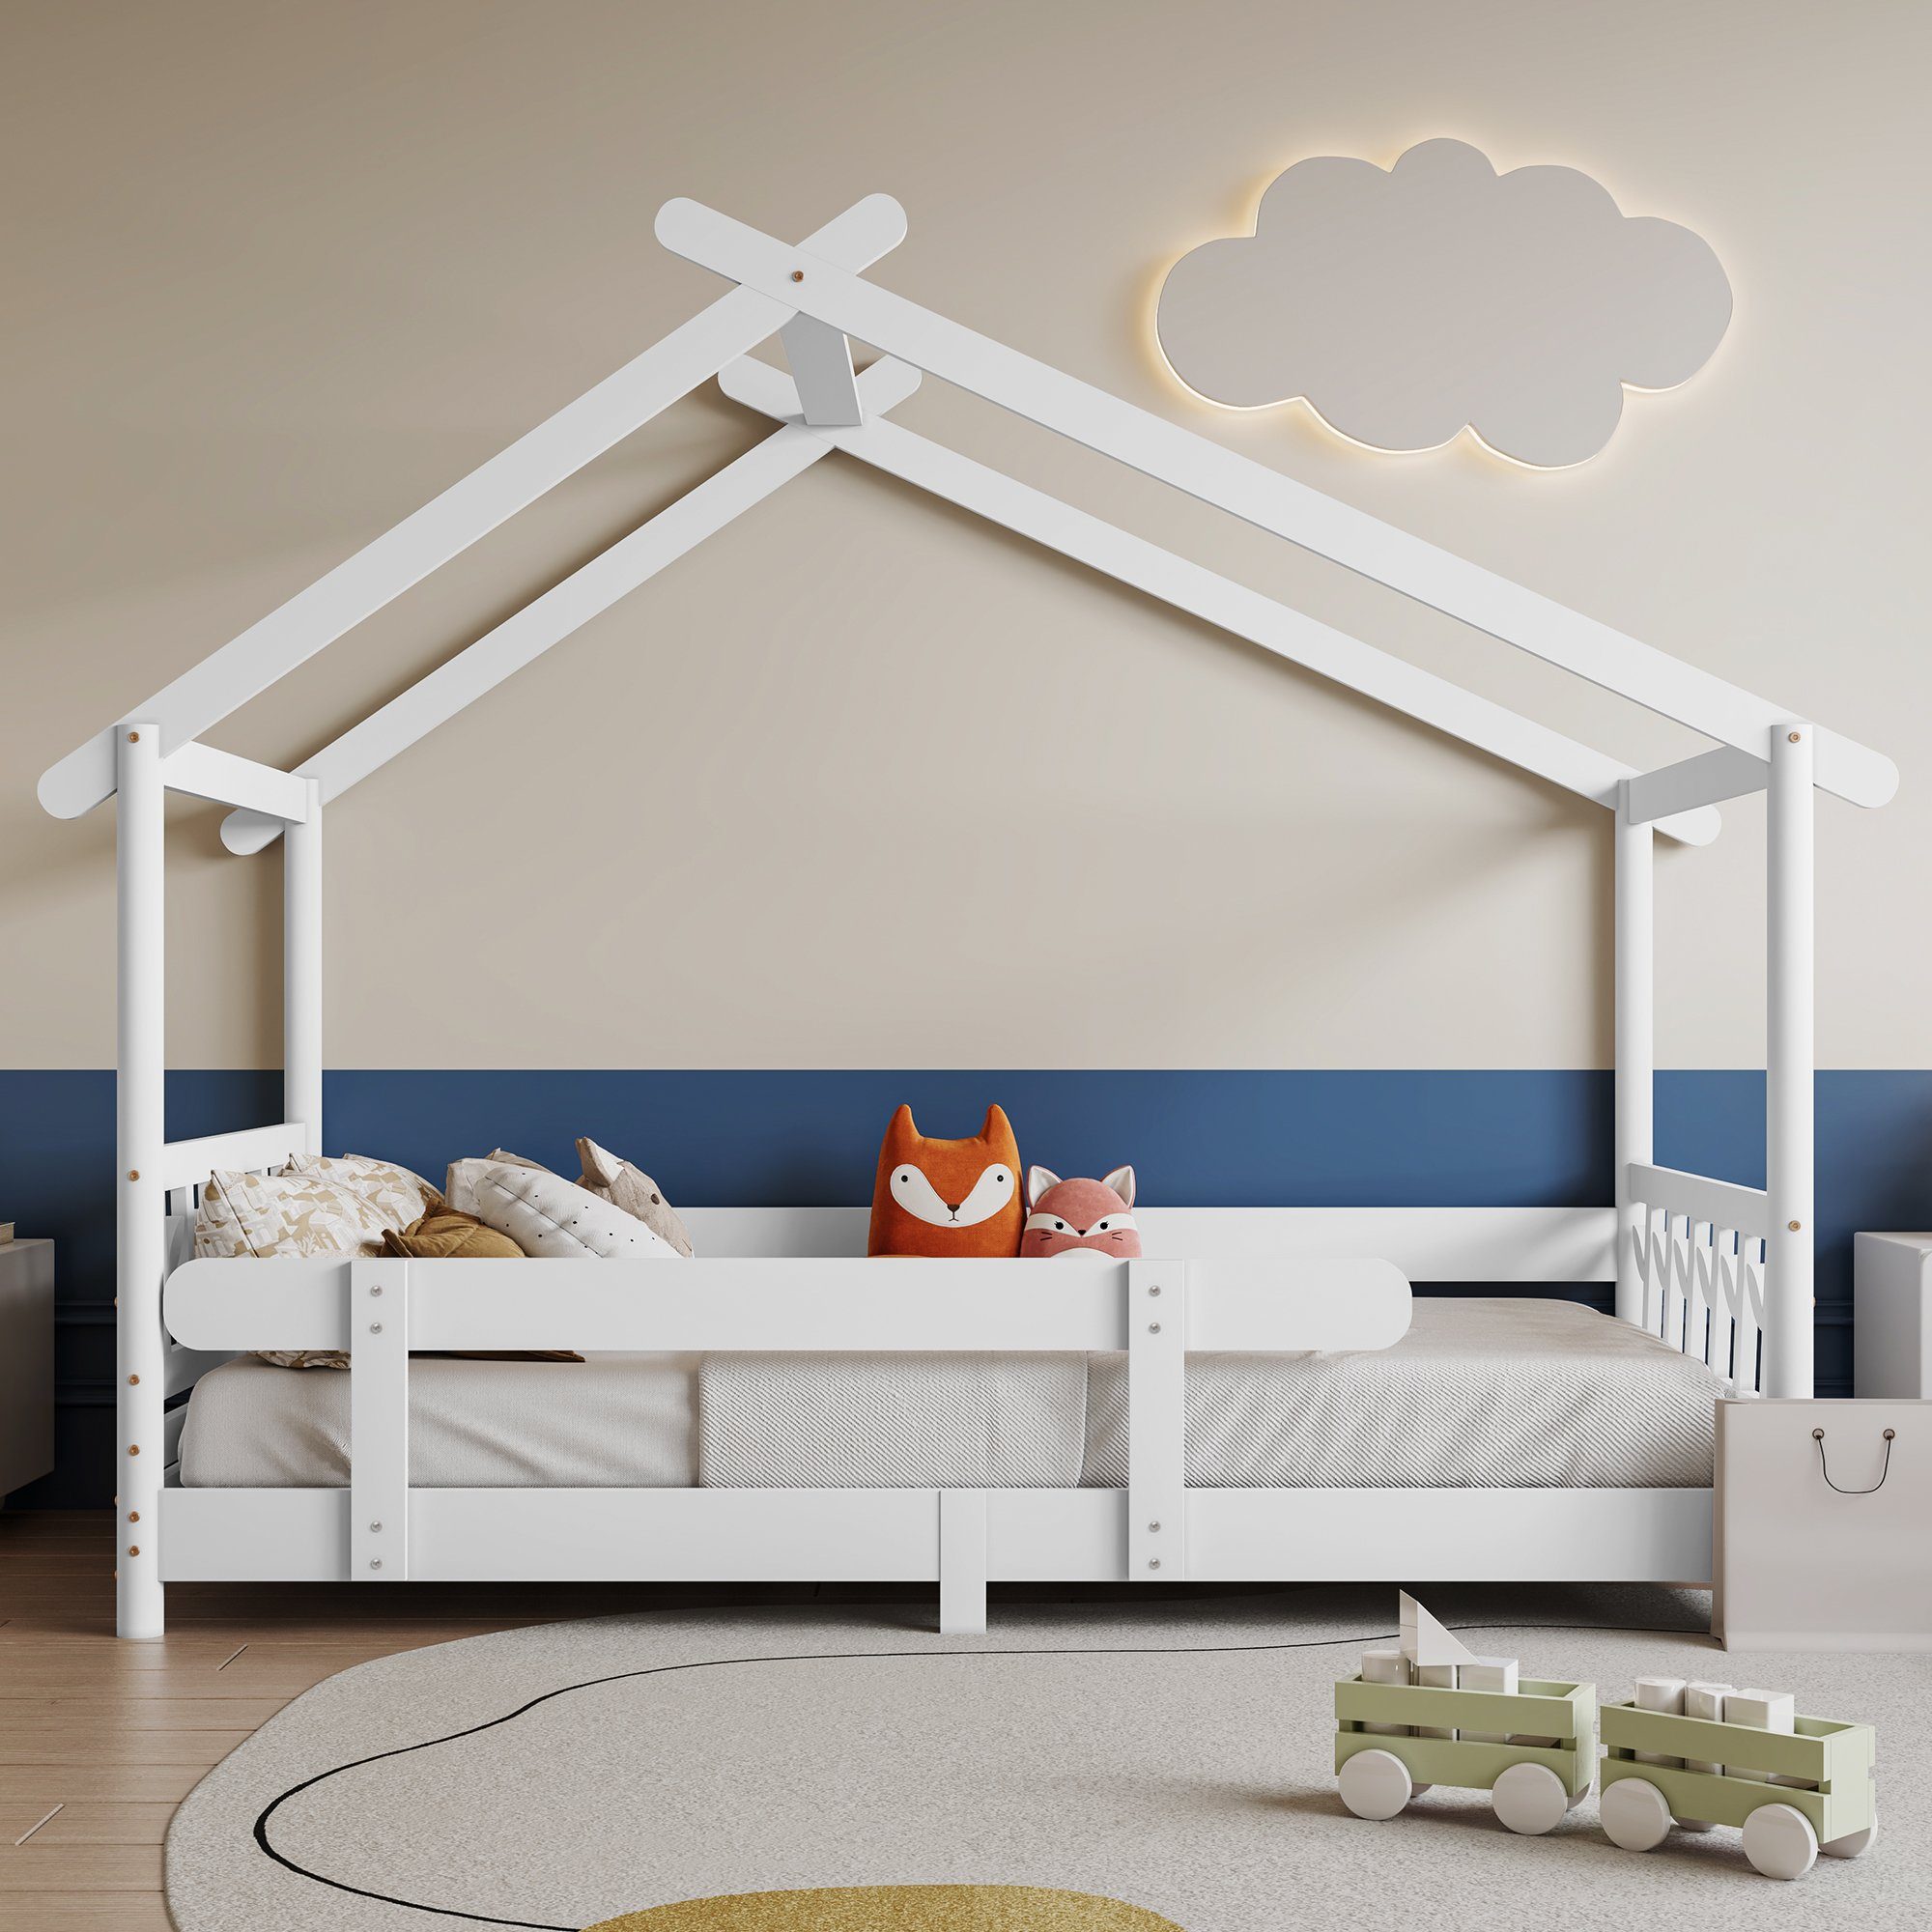 Sweiko Kinderbett, Hausbett mit Gitter, Lattenrost und Rausfallschutz,  90*190cm